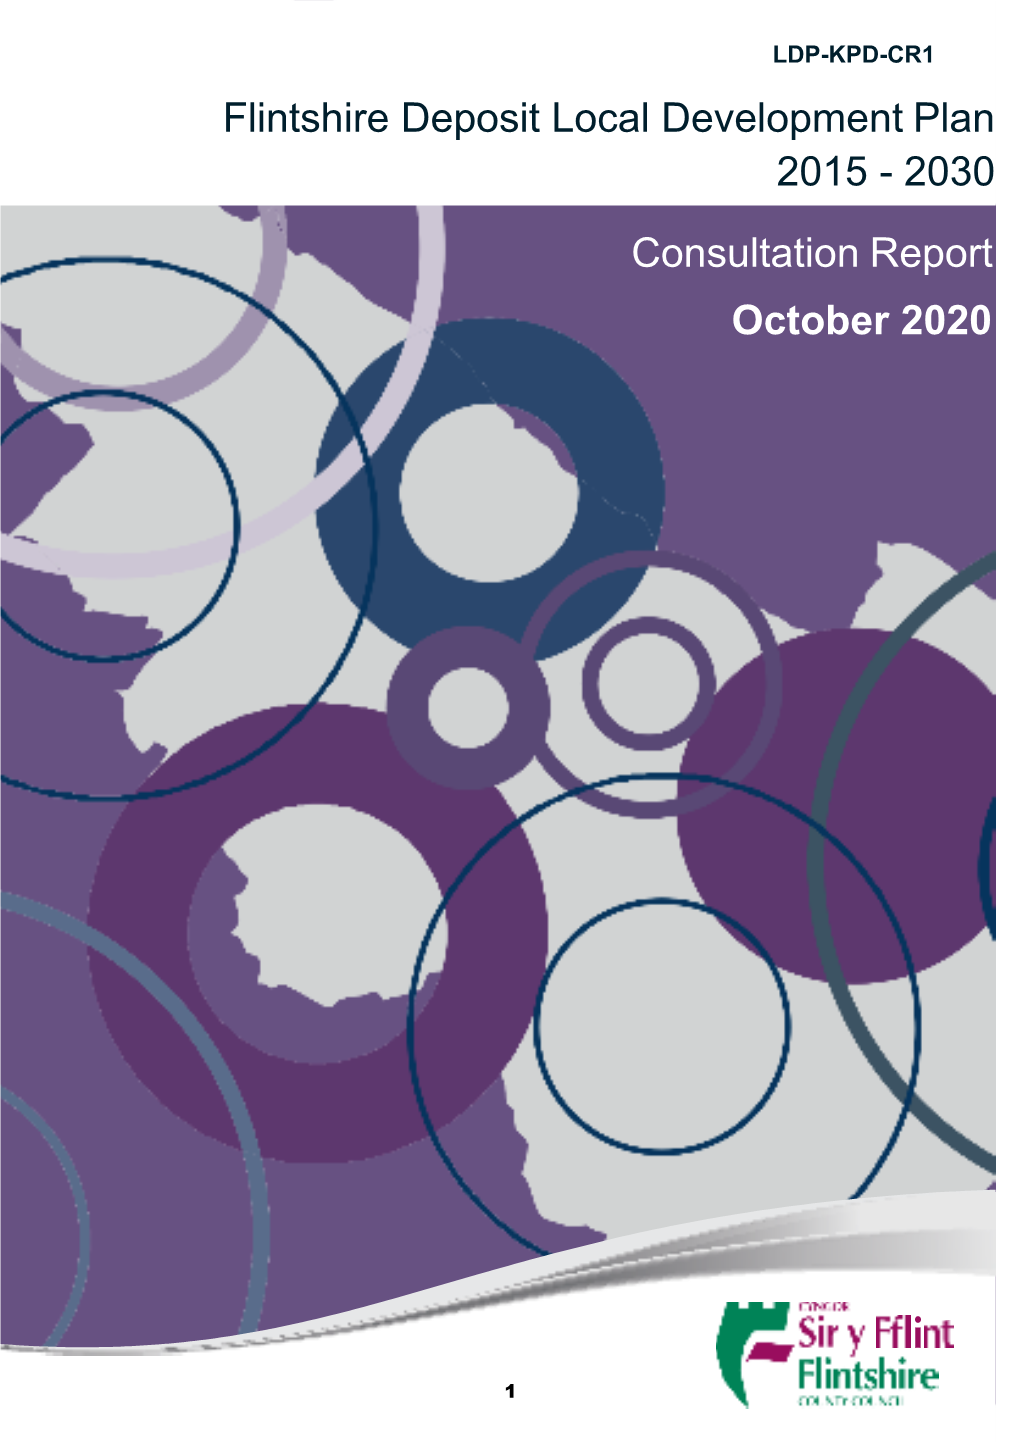 LDP-KPD-CR1 Consultation Report Oct 2020